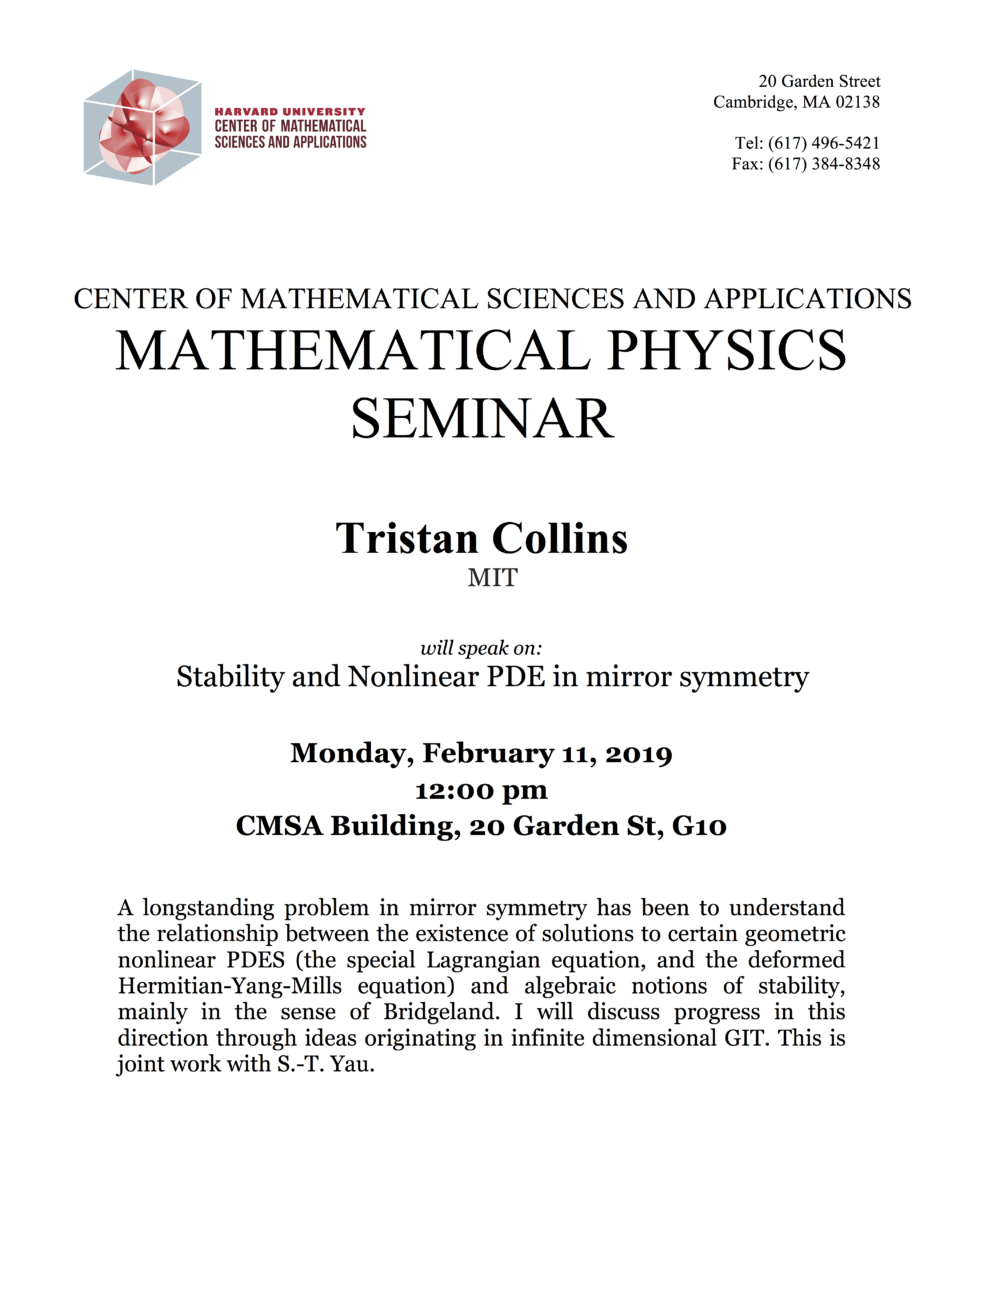 2/11/2019 Mathematical Physics Seminar